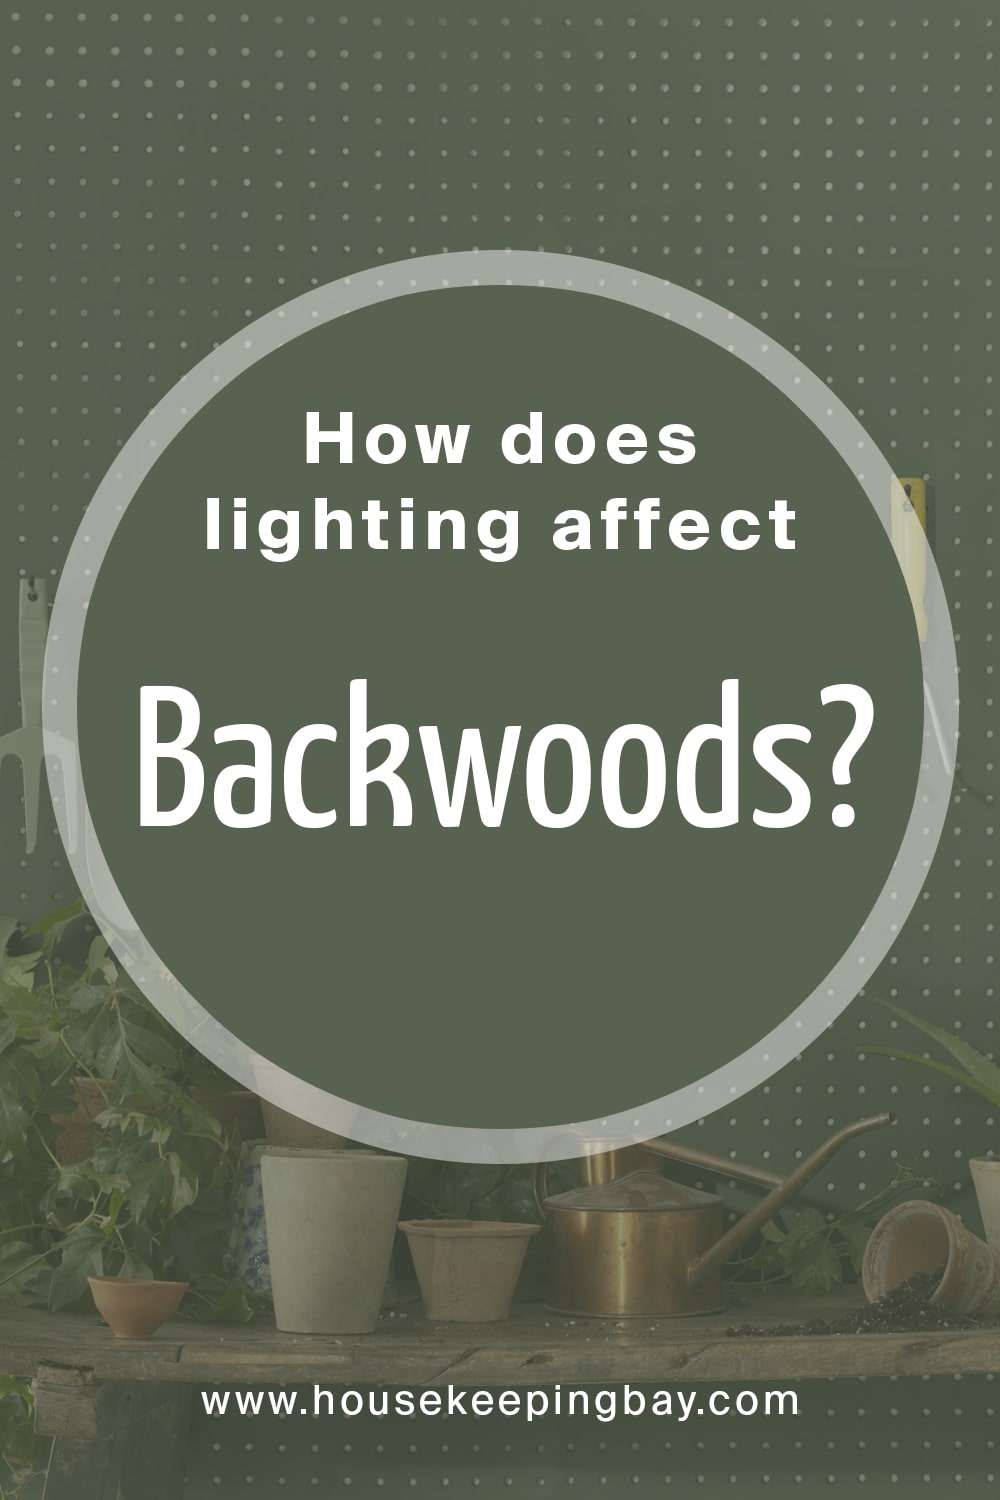 How does lighting affect Backwoods